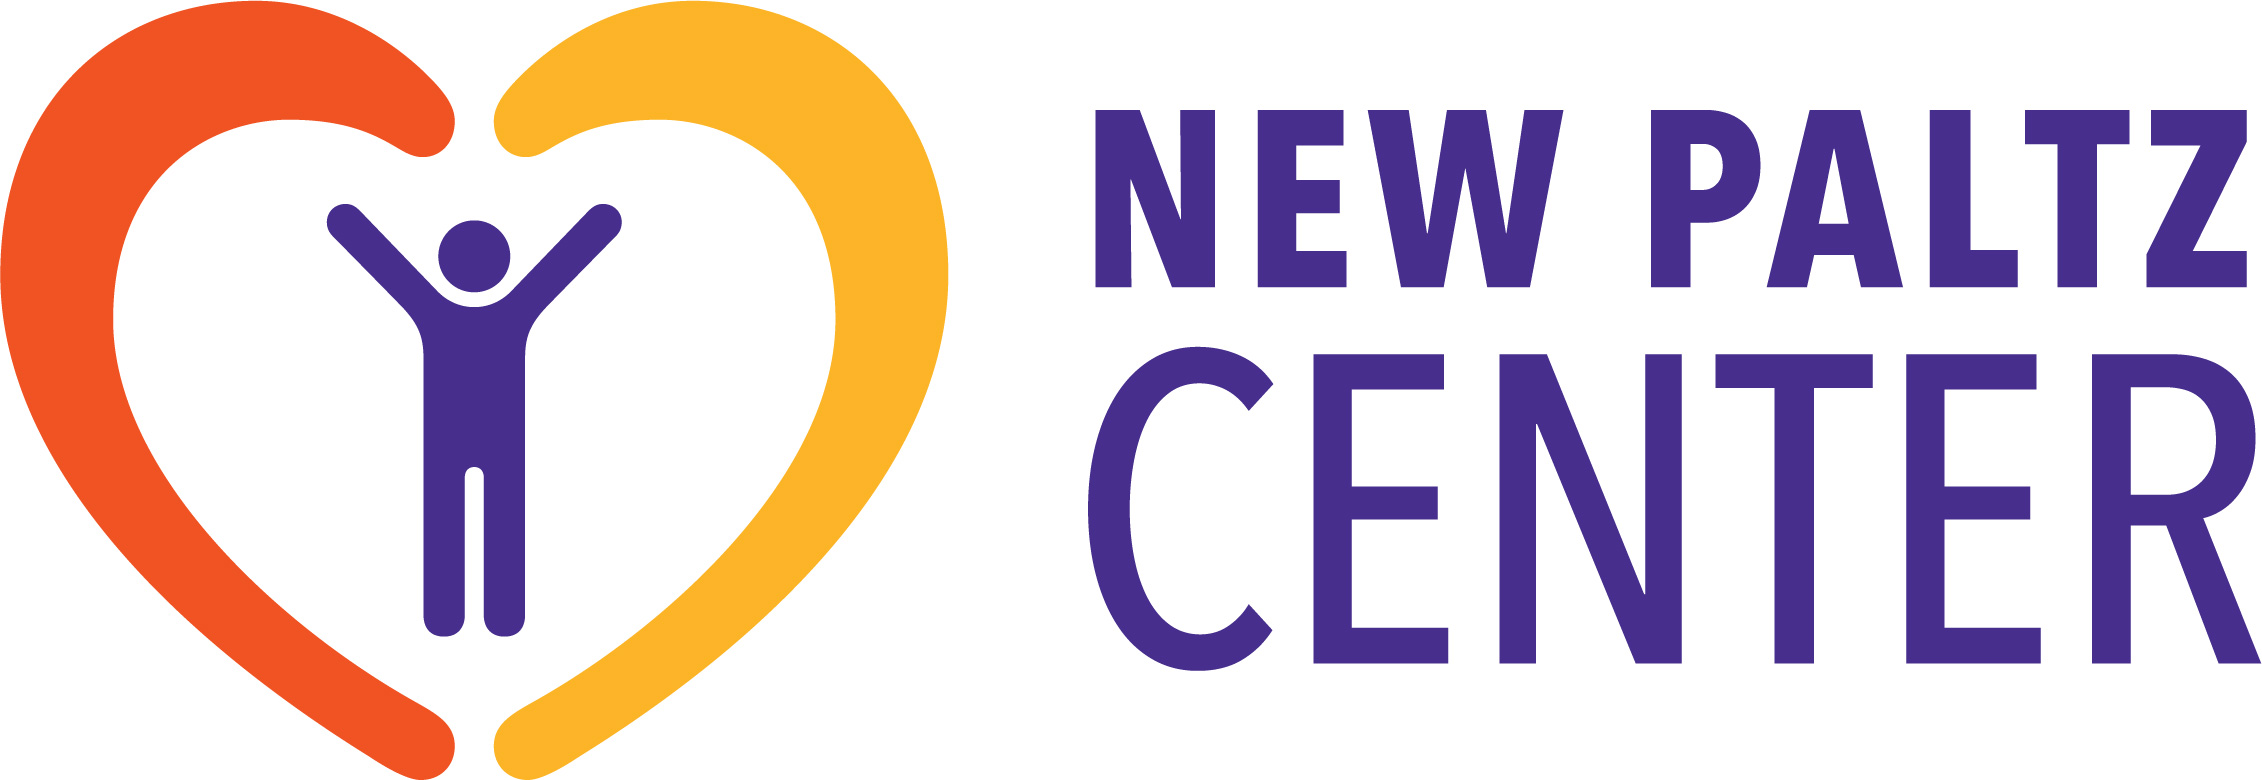 New Paltz Center logo